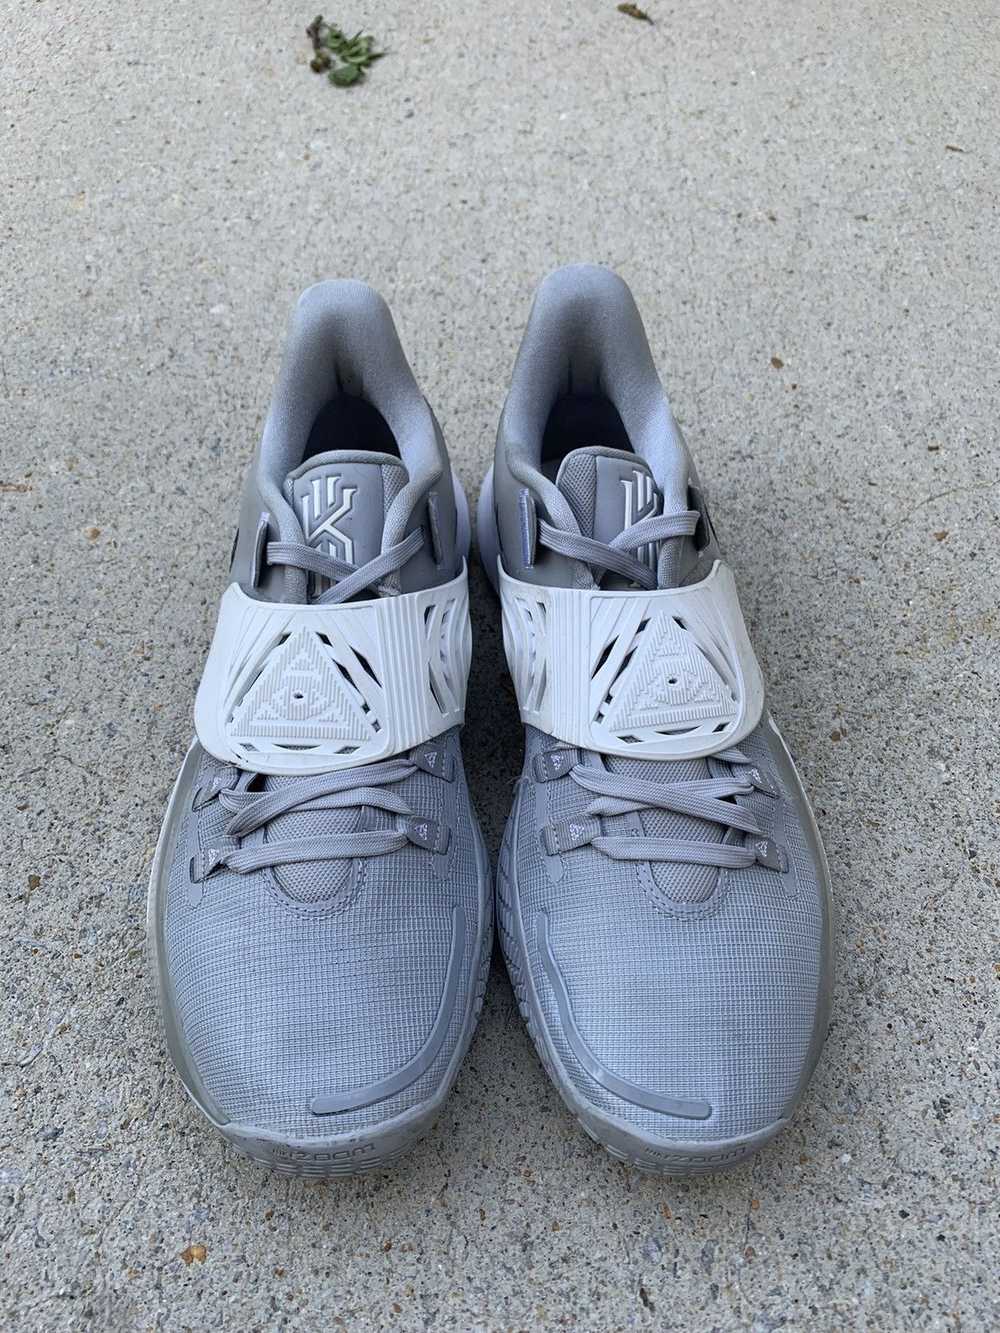 Nike Nike Kyrie Low 3 Flat Silver Black White - image 5